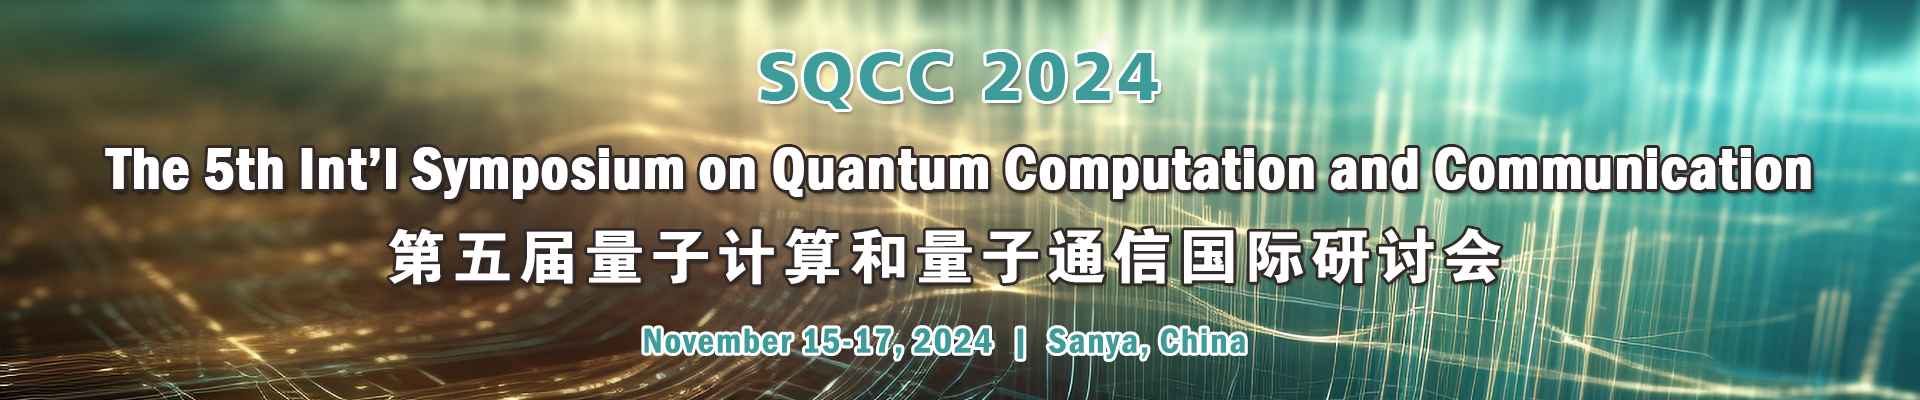 The 5th Int'l Symposium on Quantum Computation and Communication (SQCC 2024), Sanya, Hainan, China